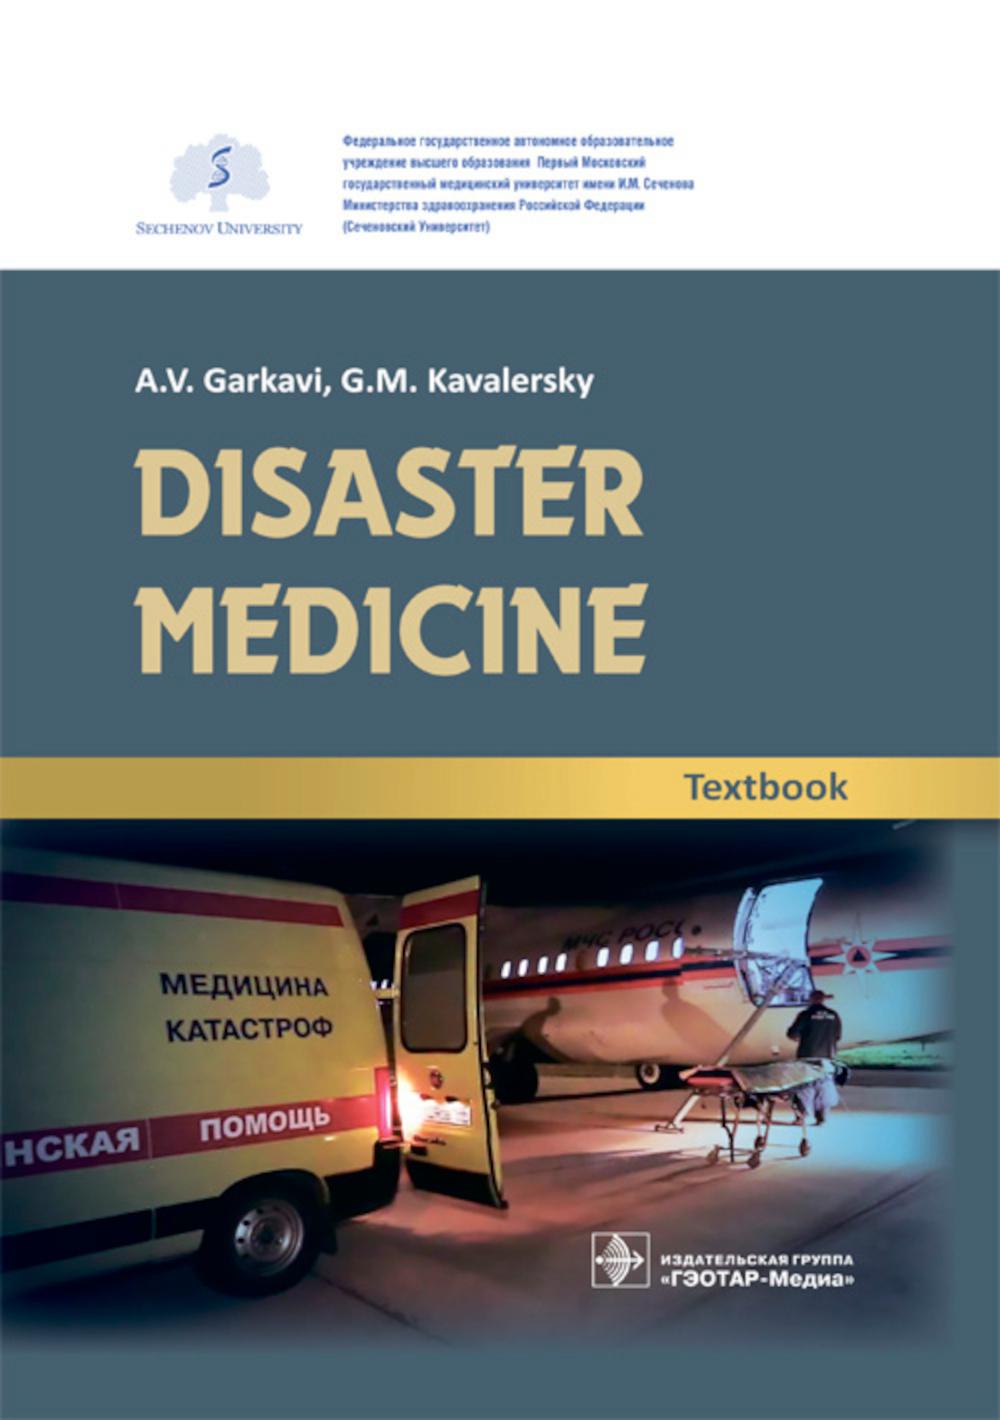 Disaster medicine : textbook / A. V. Garkavi, G. M. Kavalersky [et al.].  M. : GEOTAR-Media, 2019.  304 p. : il.  DOI: 10.33029/9704-5258-5-DMG-2019-1-304.